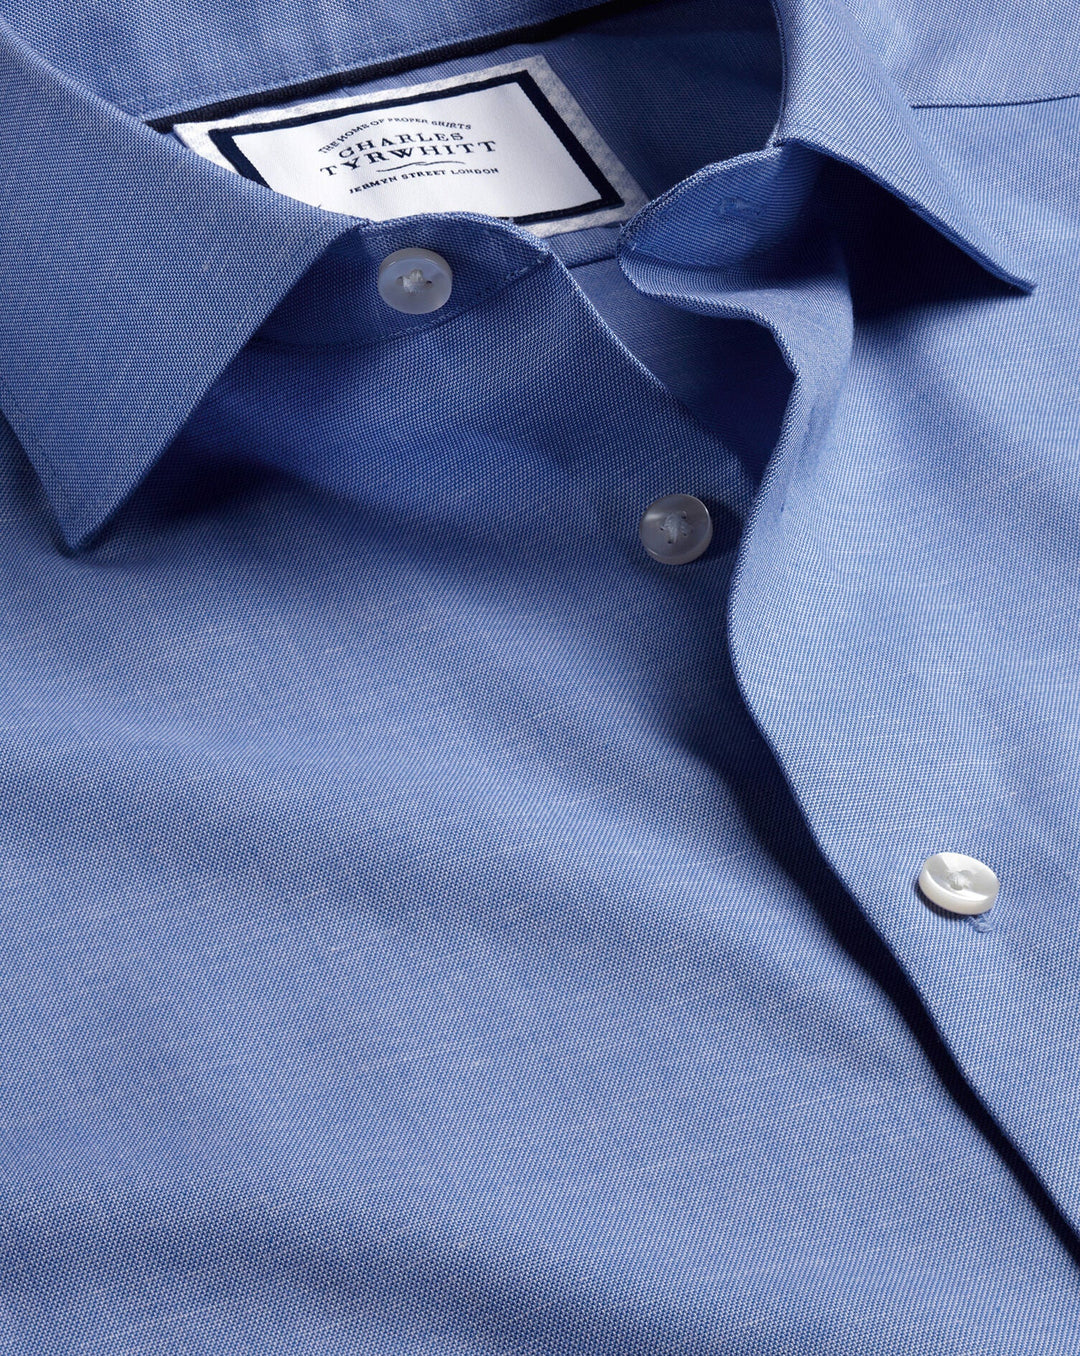 Charles Tyrwhitt Cobalt Blue Non-Iron Cotton Linen Plain Slim Fit Shirt